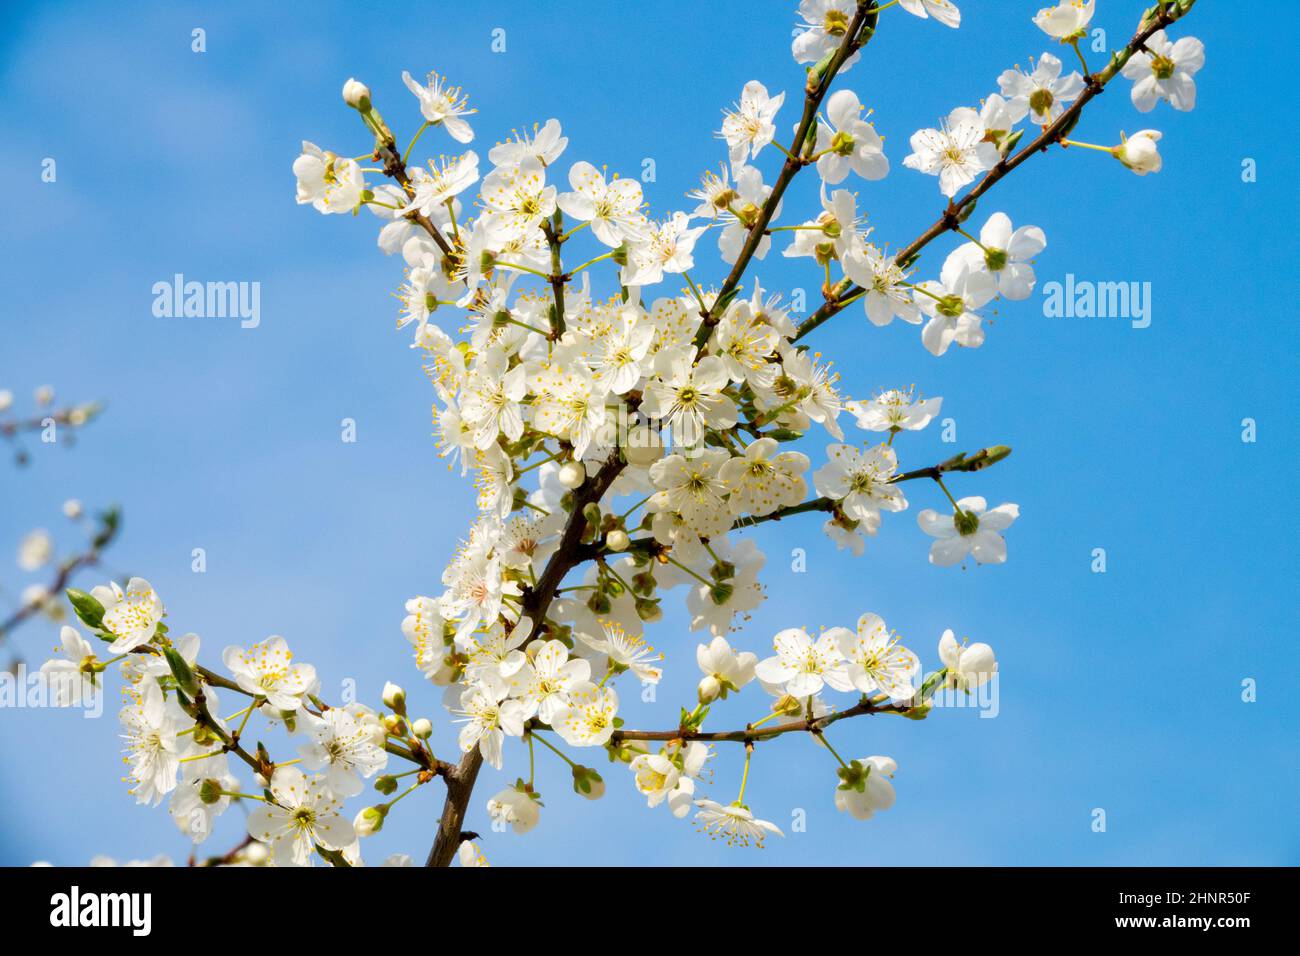 Spring,Blooming,Tree,Against,Blue sky,Prunus domestica,Prunus,Early spring,Branches,Flowers Stock Photo